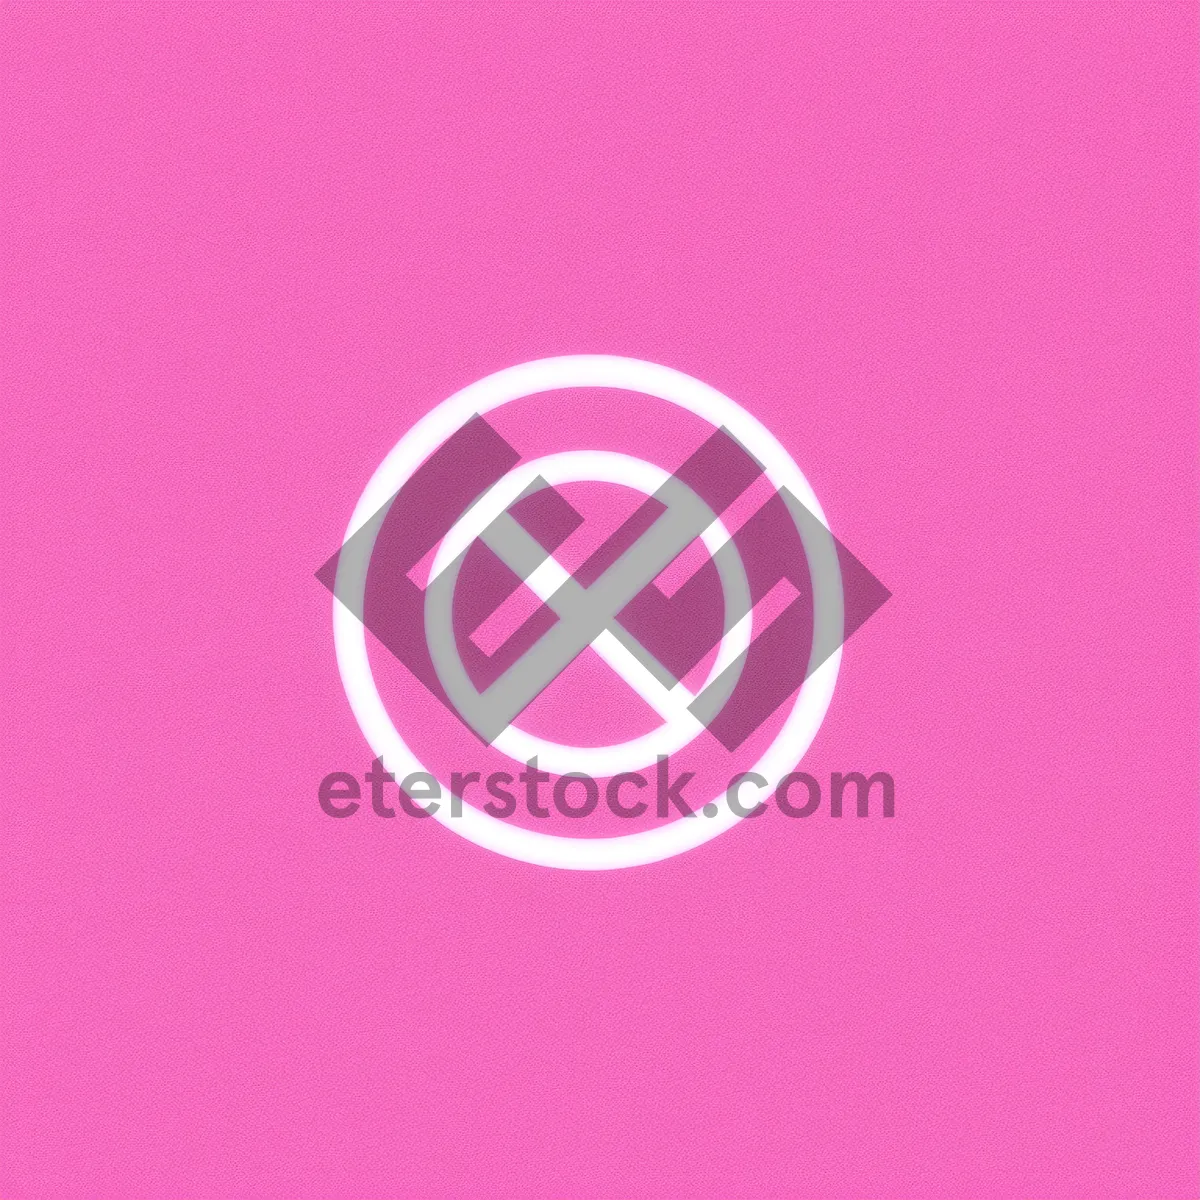 Picture of Floral Pink Swirls: Creative Retro Graphic Wallpaper Design